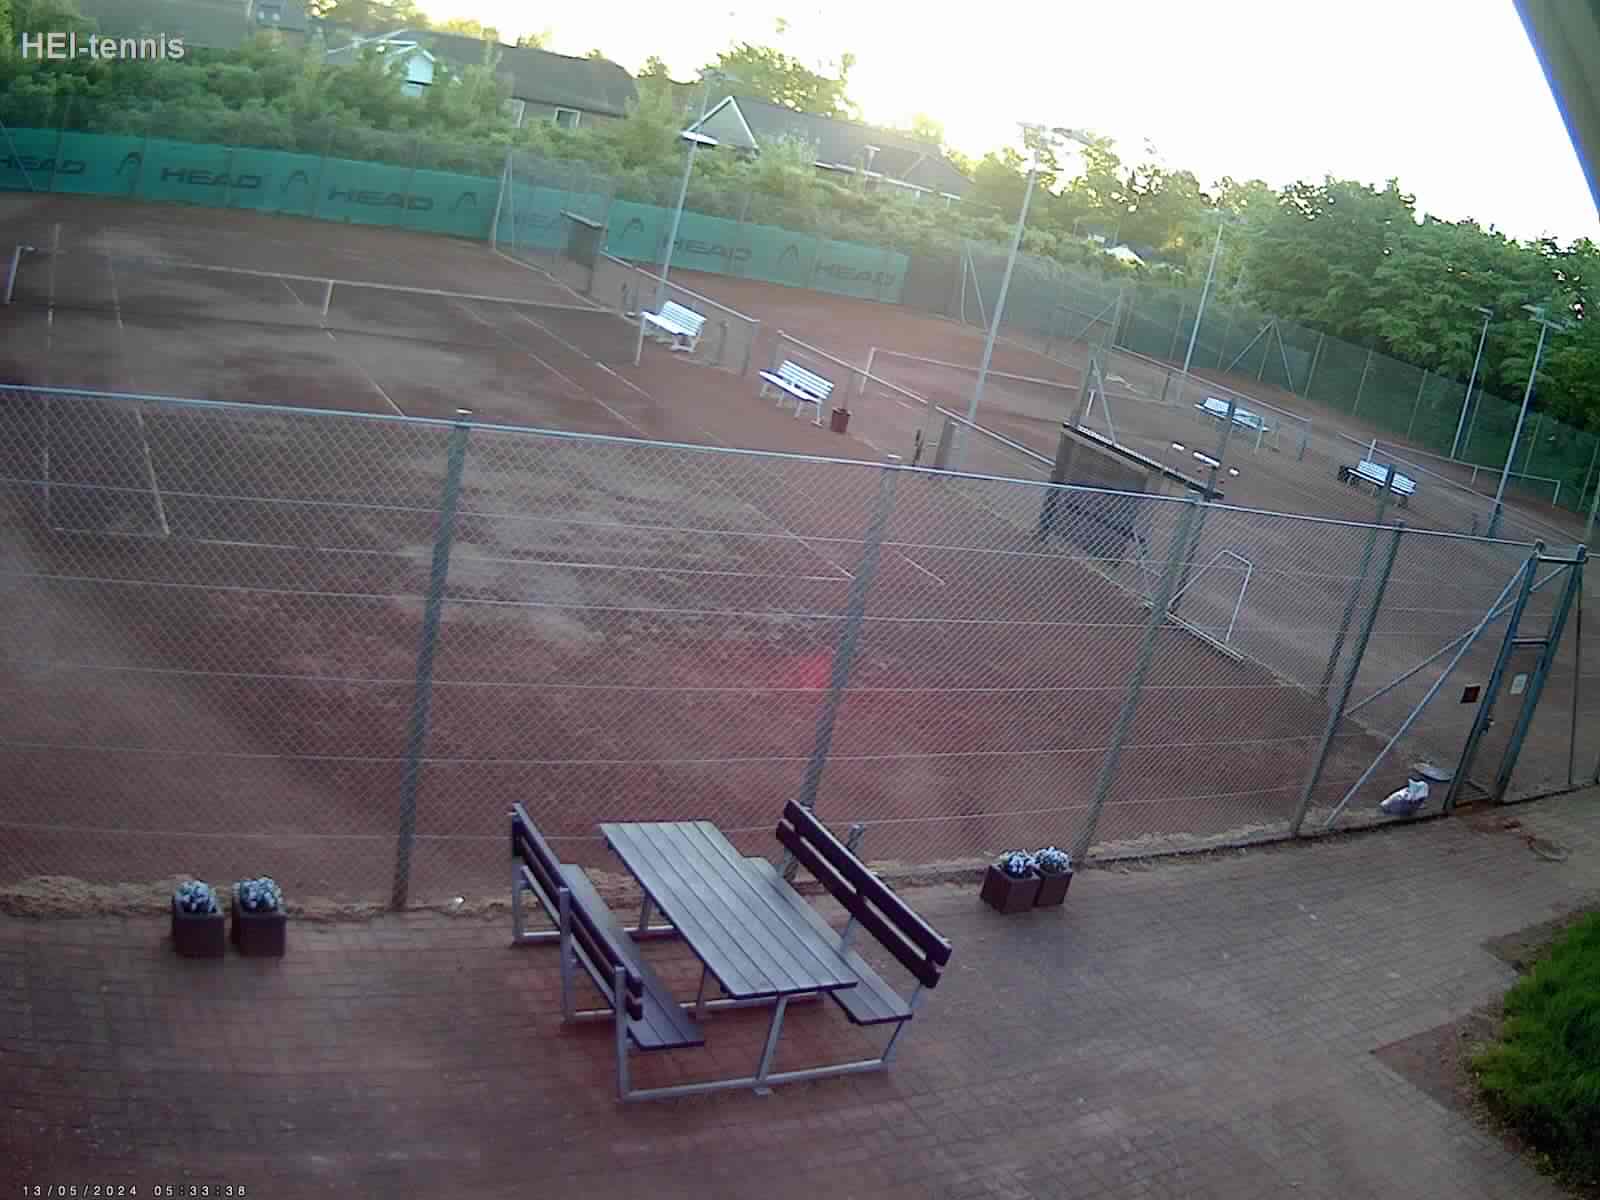 Webcam outdoor tennis Egaa Egaa Denmark - Webcams Abroad live images